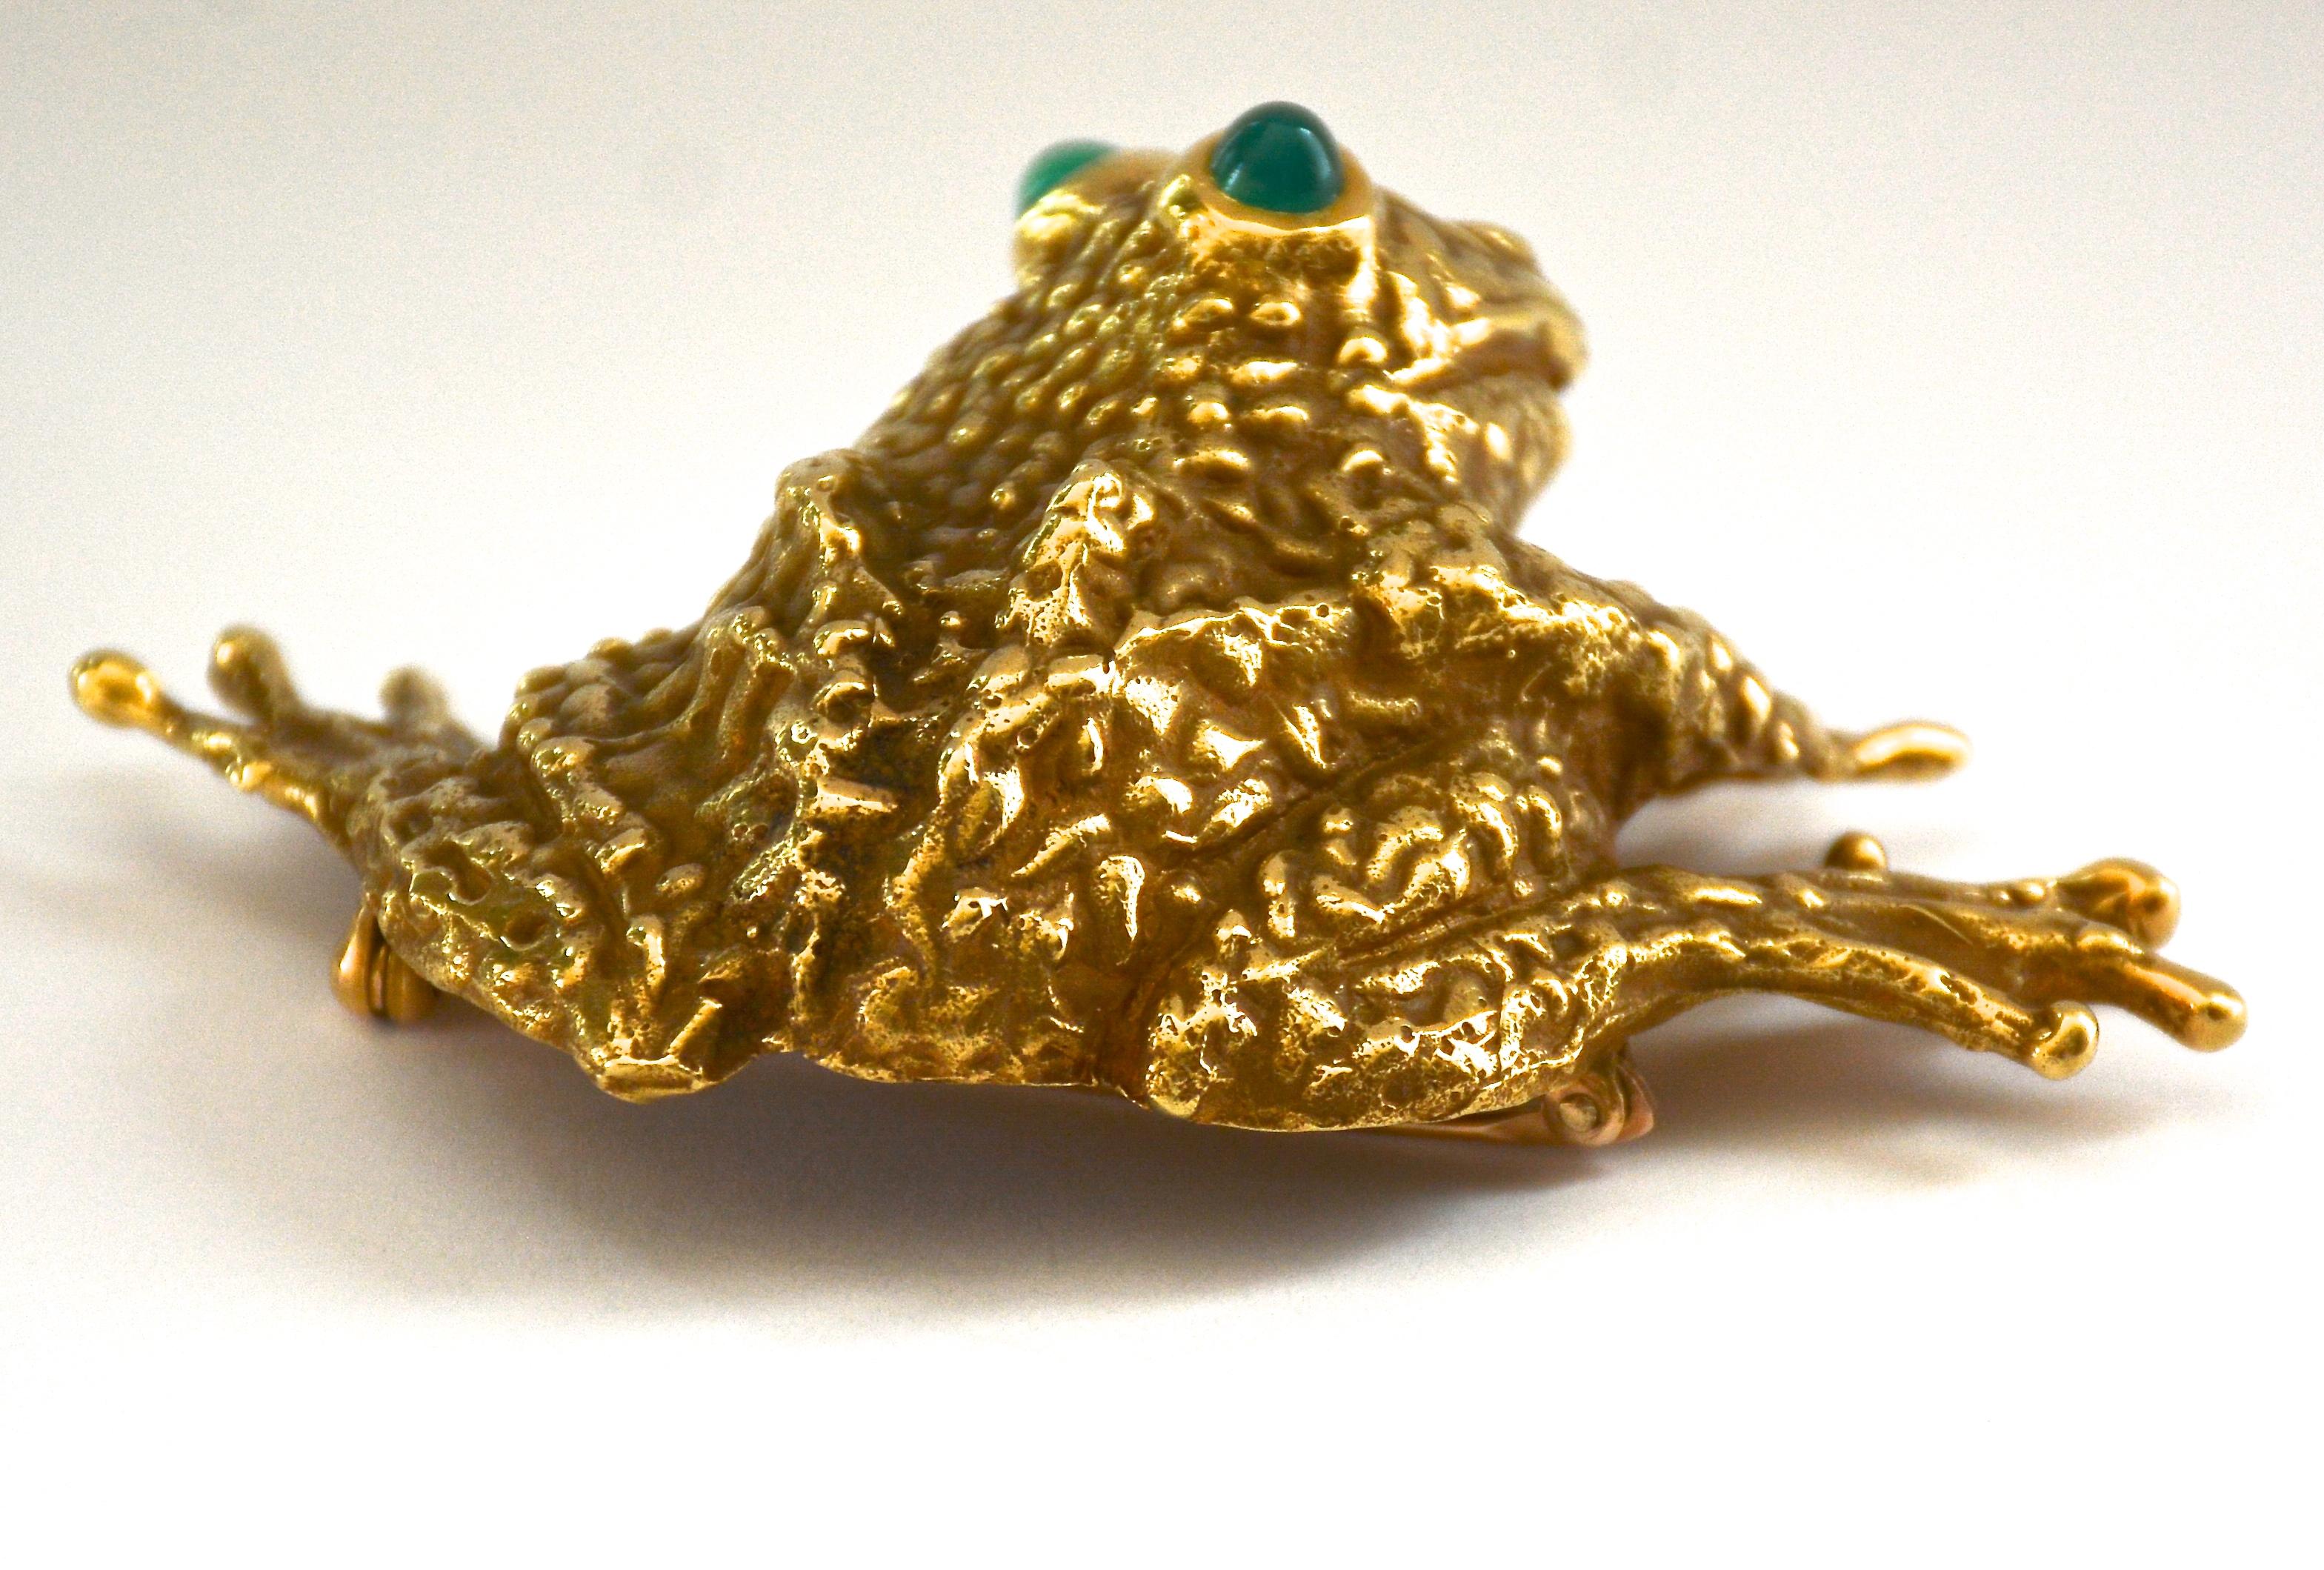 Women's Erwin Pearl 1980s Fine Jewelry 18k. Gold Frog Brooch Set with Chrysoprase Eyes